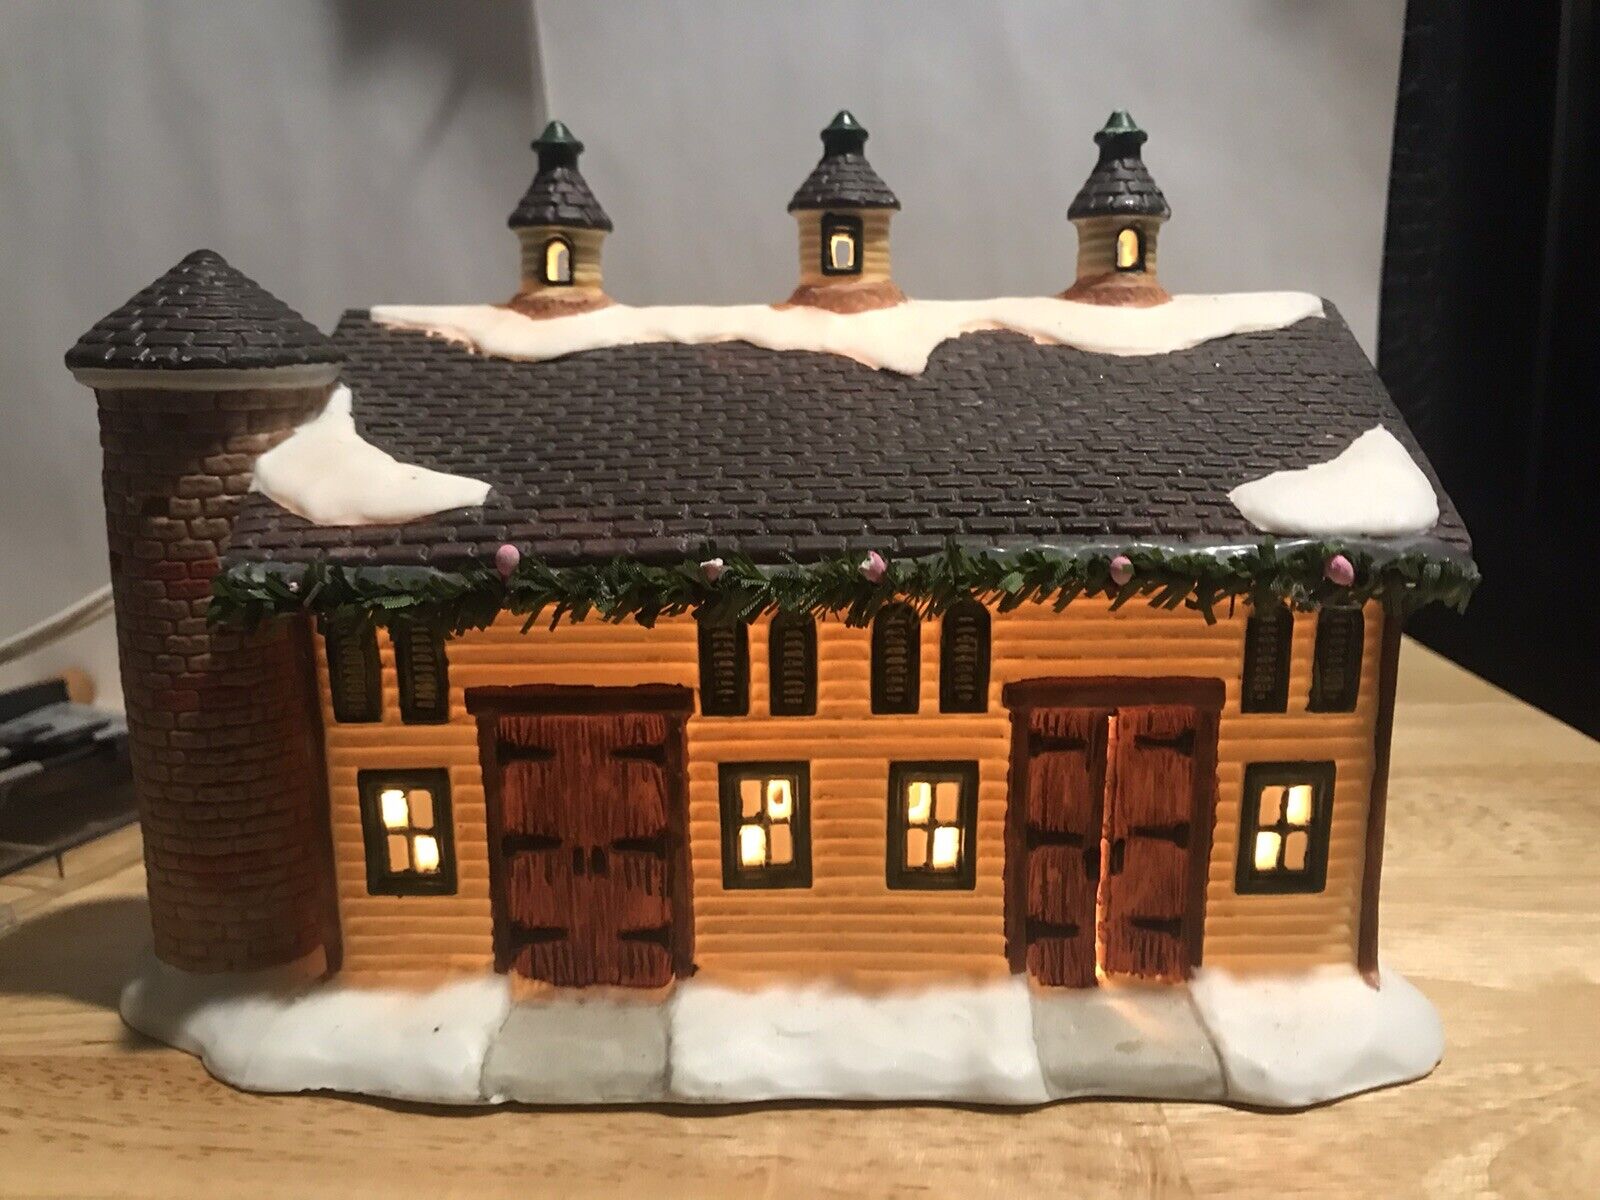 1997 seasonal specialties co Barn house Chrismas decor  Holiday Miniature House